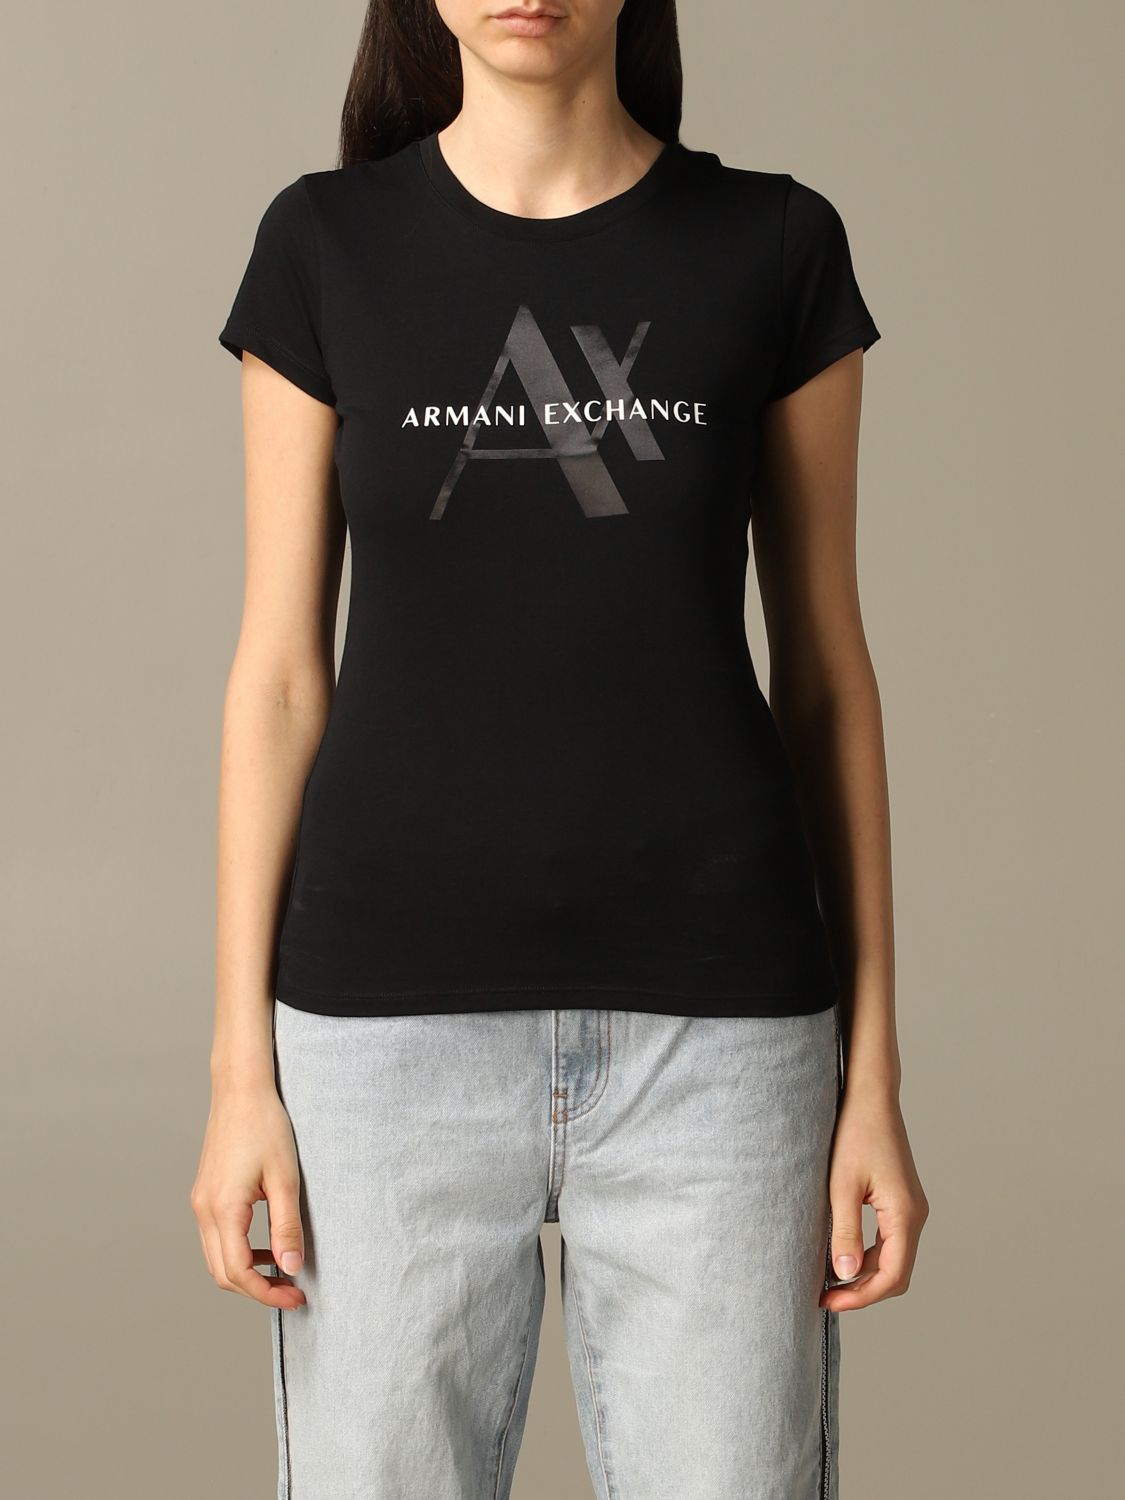 Outlet de Armani Exchange: Camiseta para mujer, | Camiseta Armani Exchange YJ73Z en línea en